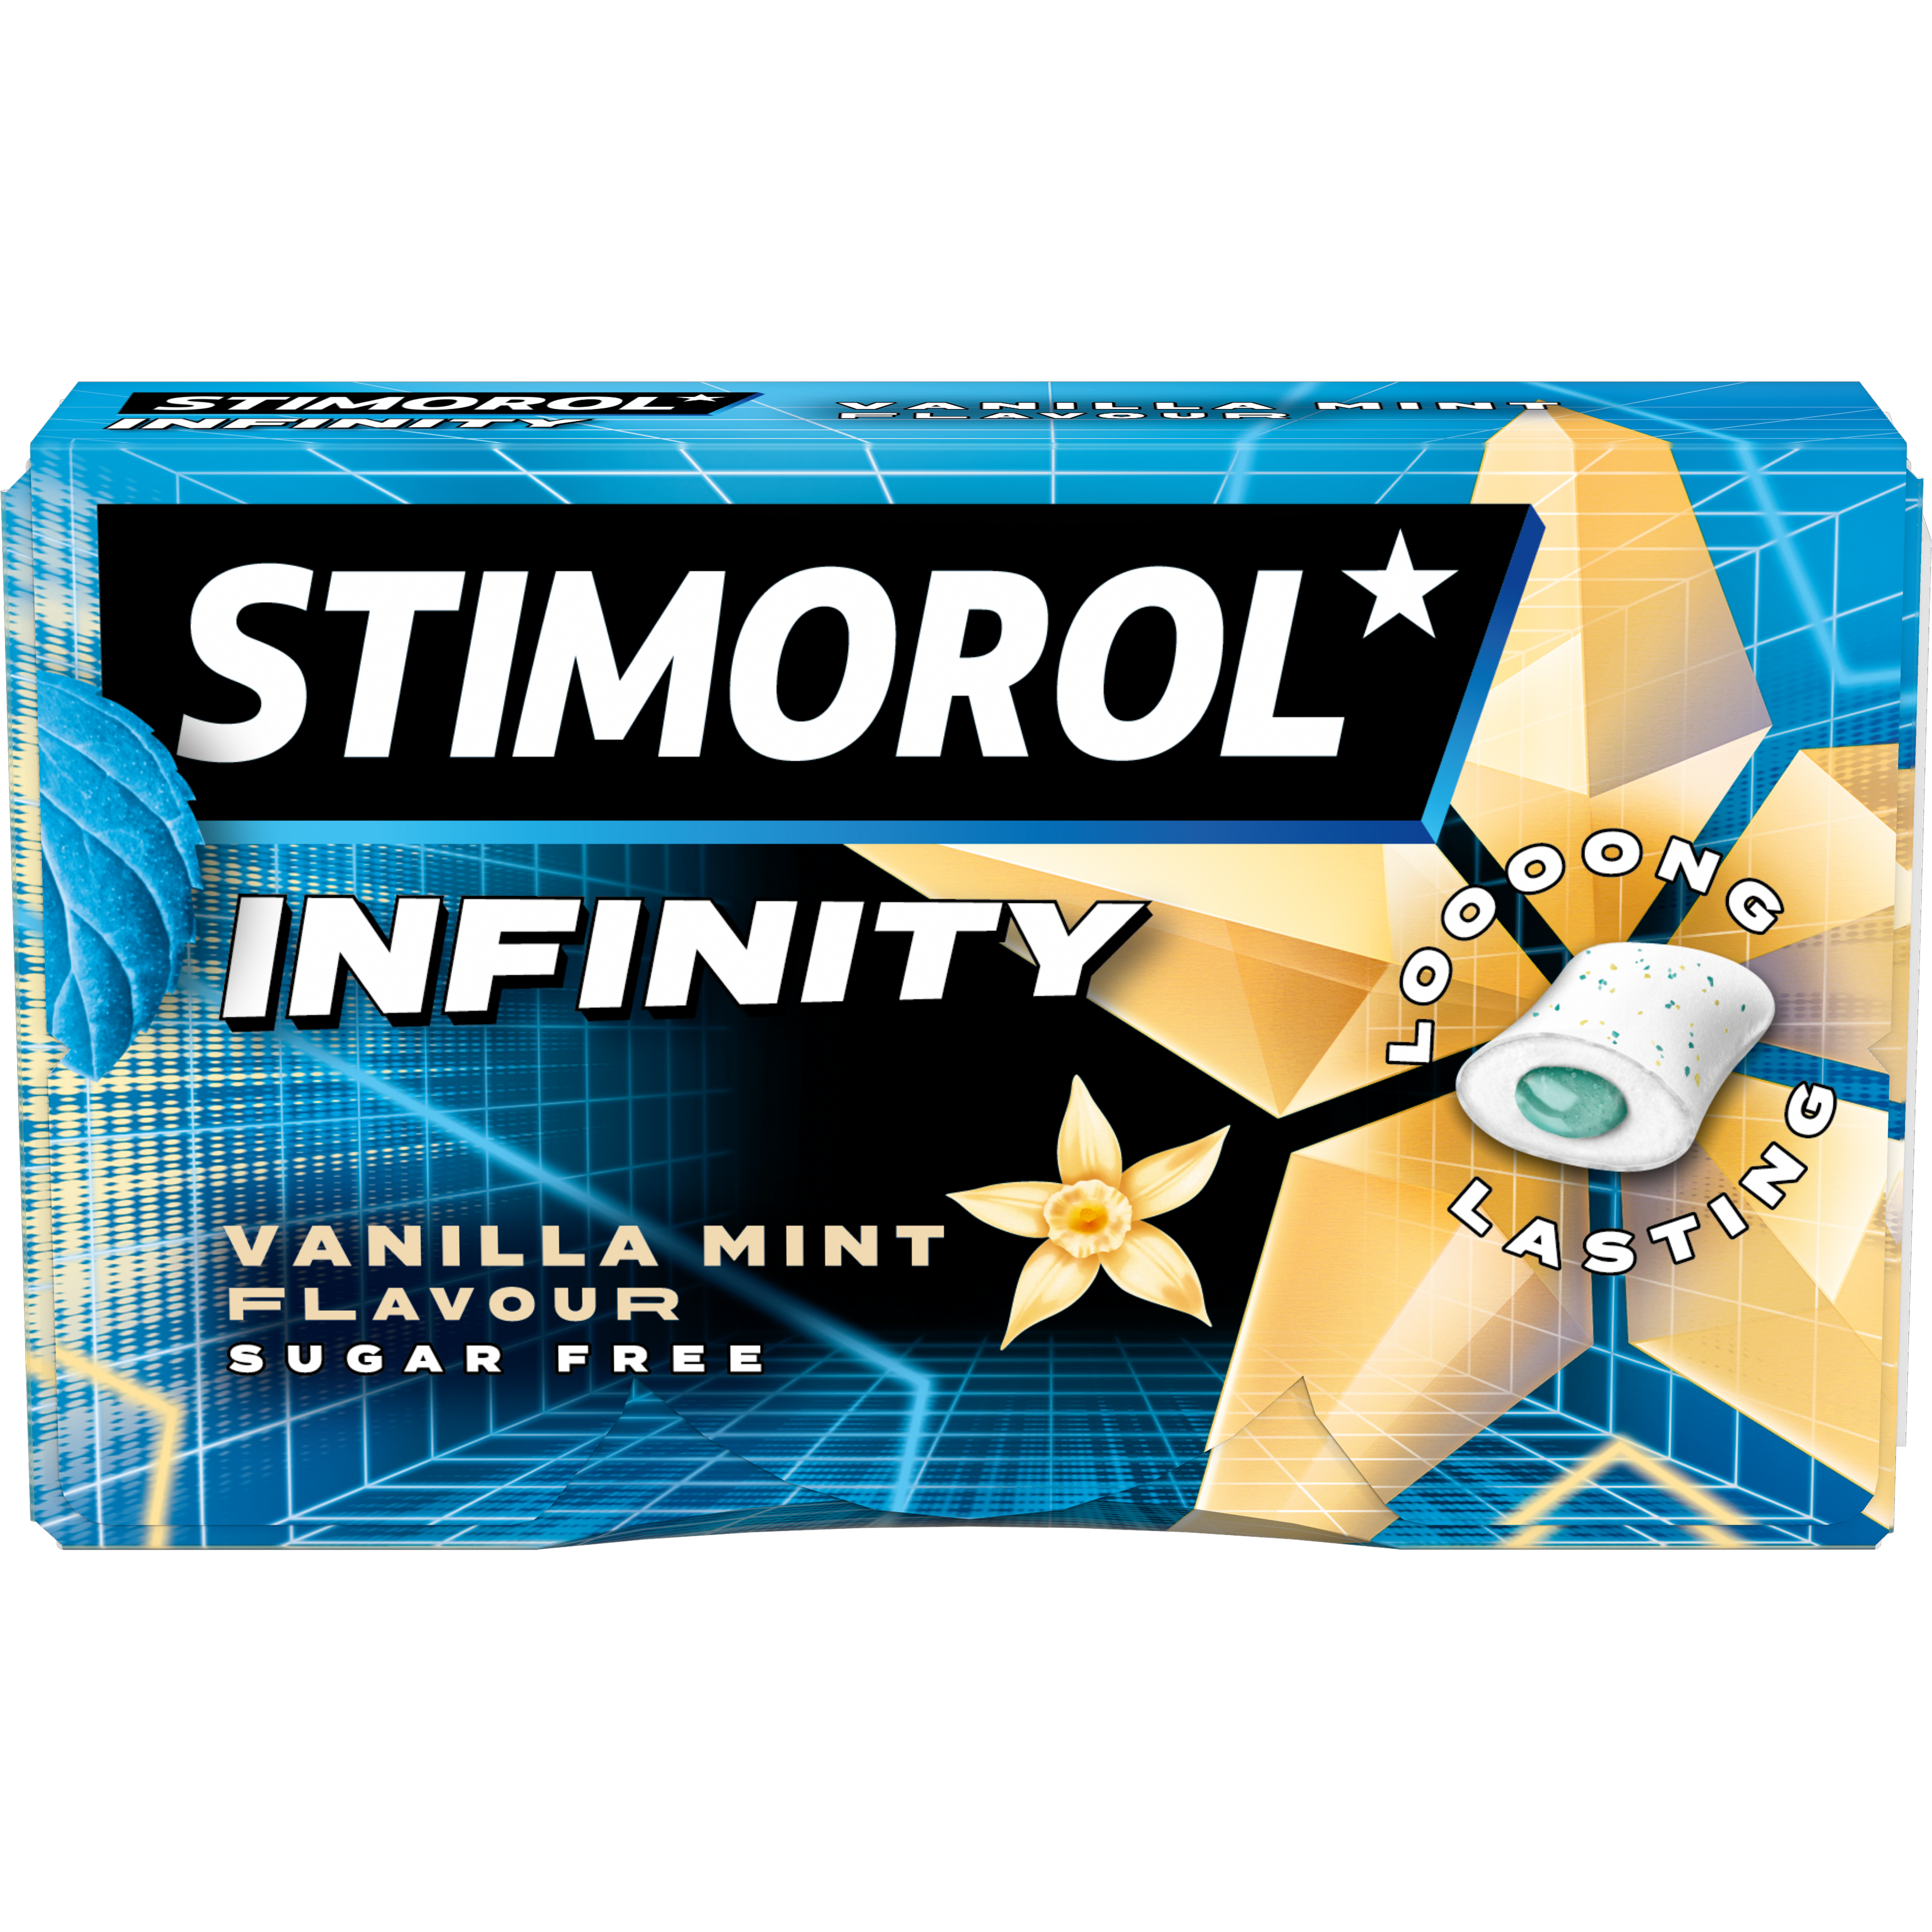 Stimorol Infinity Vanilla Mint